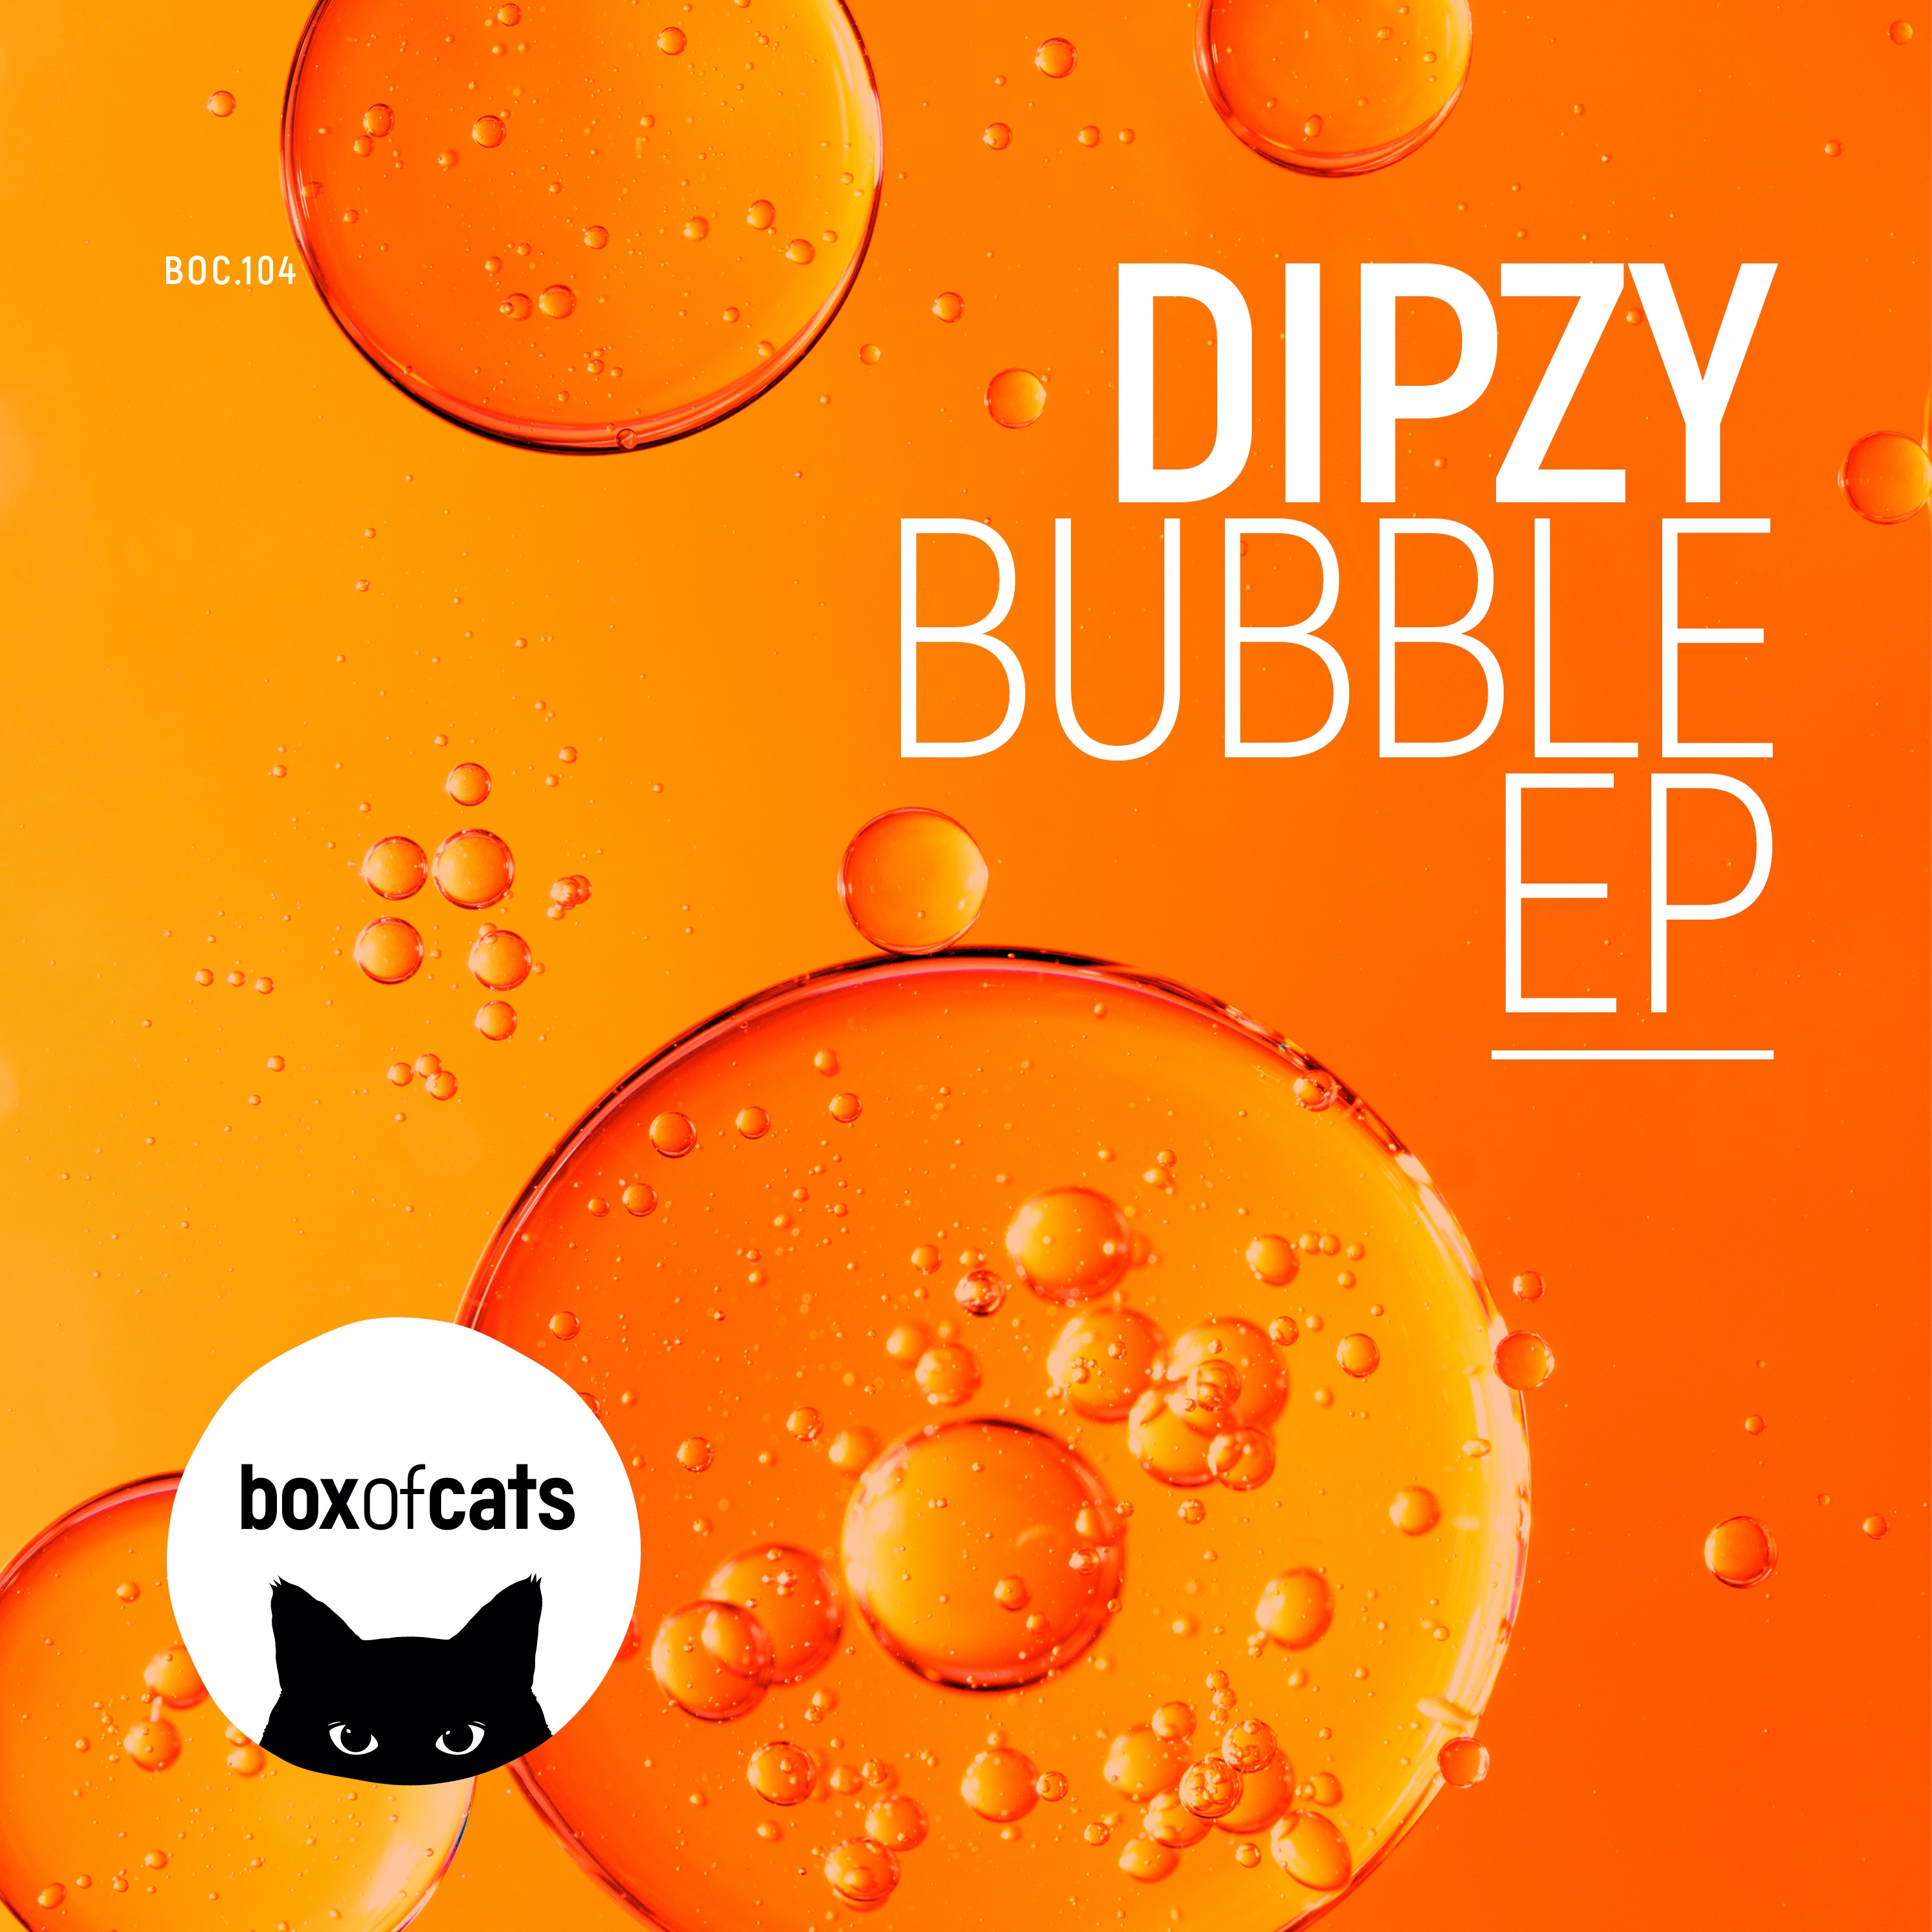 Soo dejiso Dipzy - Bubble (BOC104)